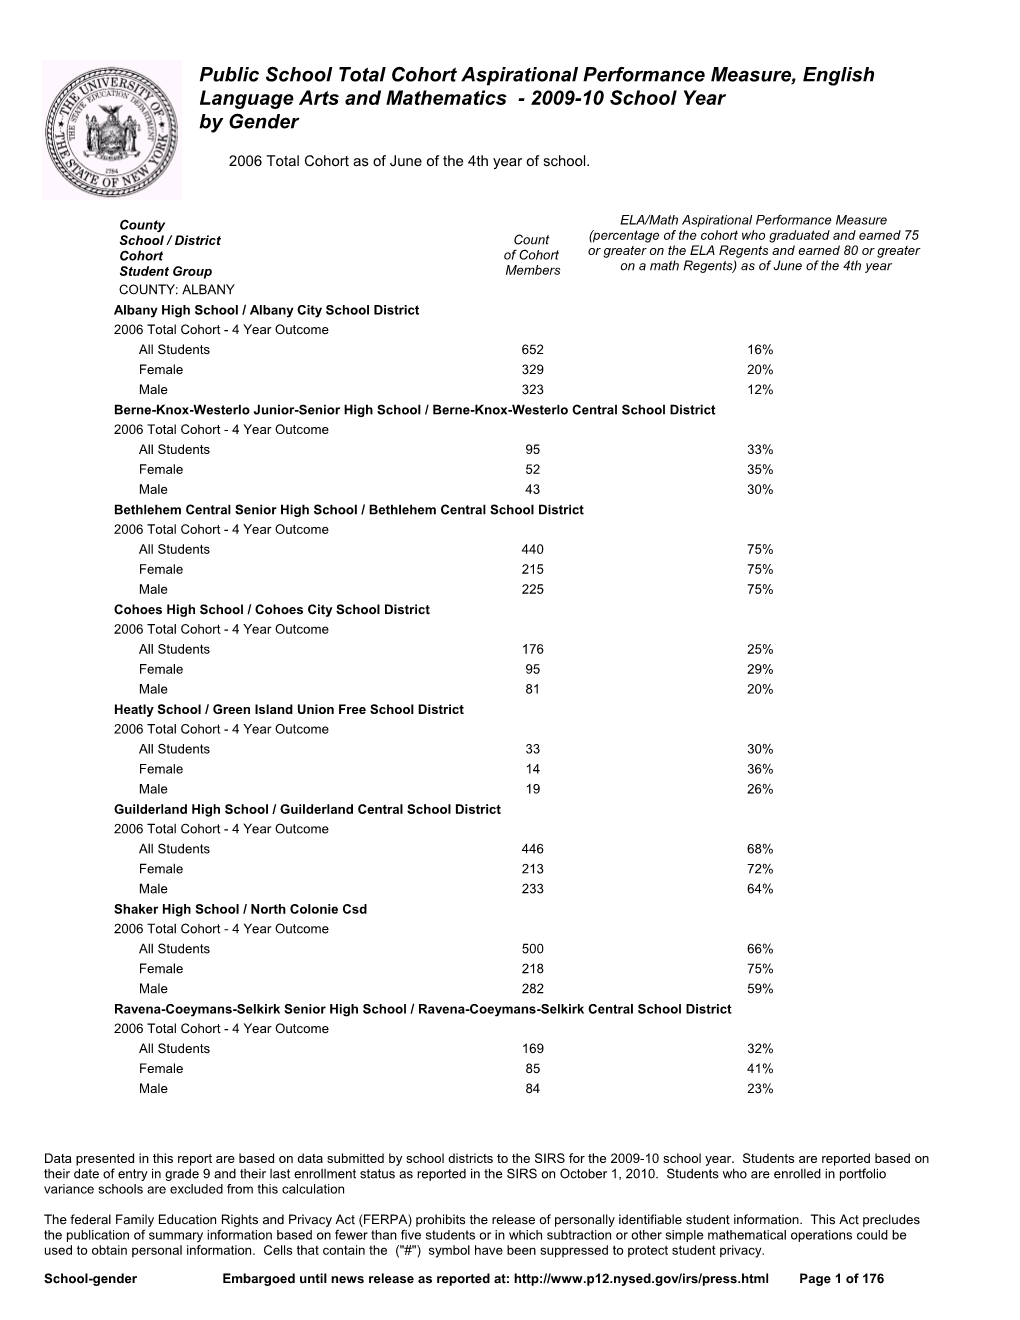 Public School Total Cohort Aspirational Performance Measure, ELA and Math 2009-10 by Gender